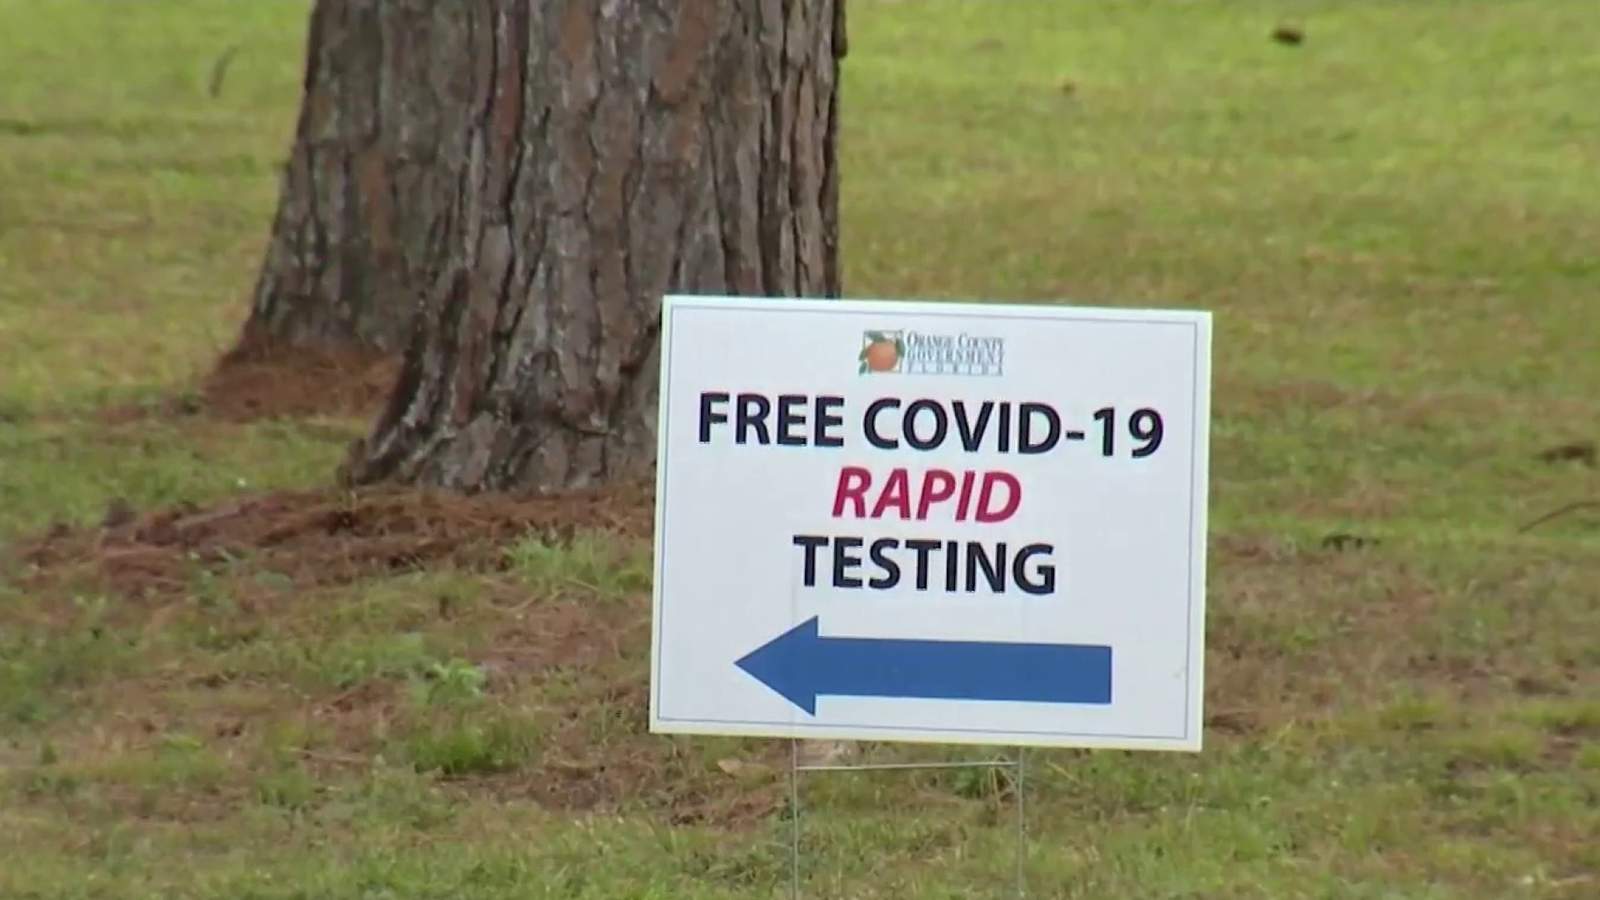 COVID-19 rapid testing extended at Barnett Park through April